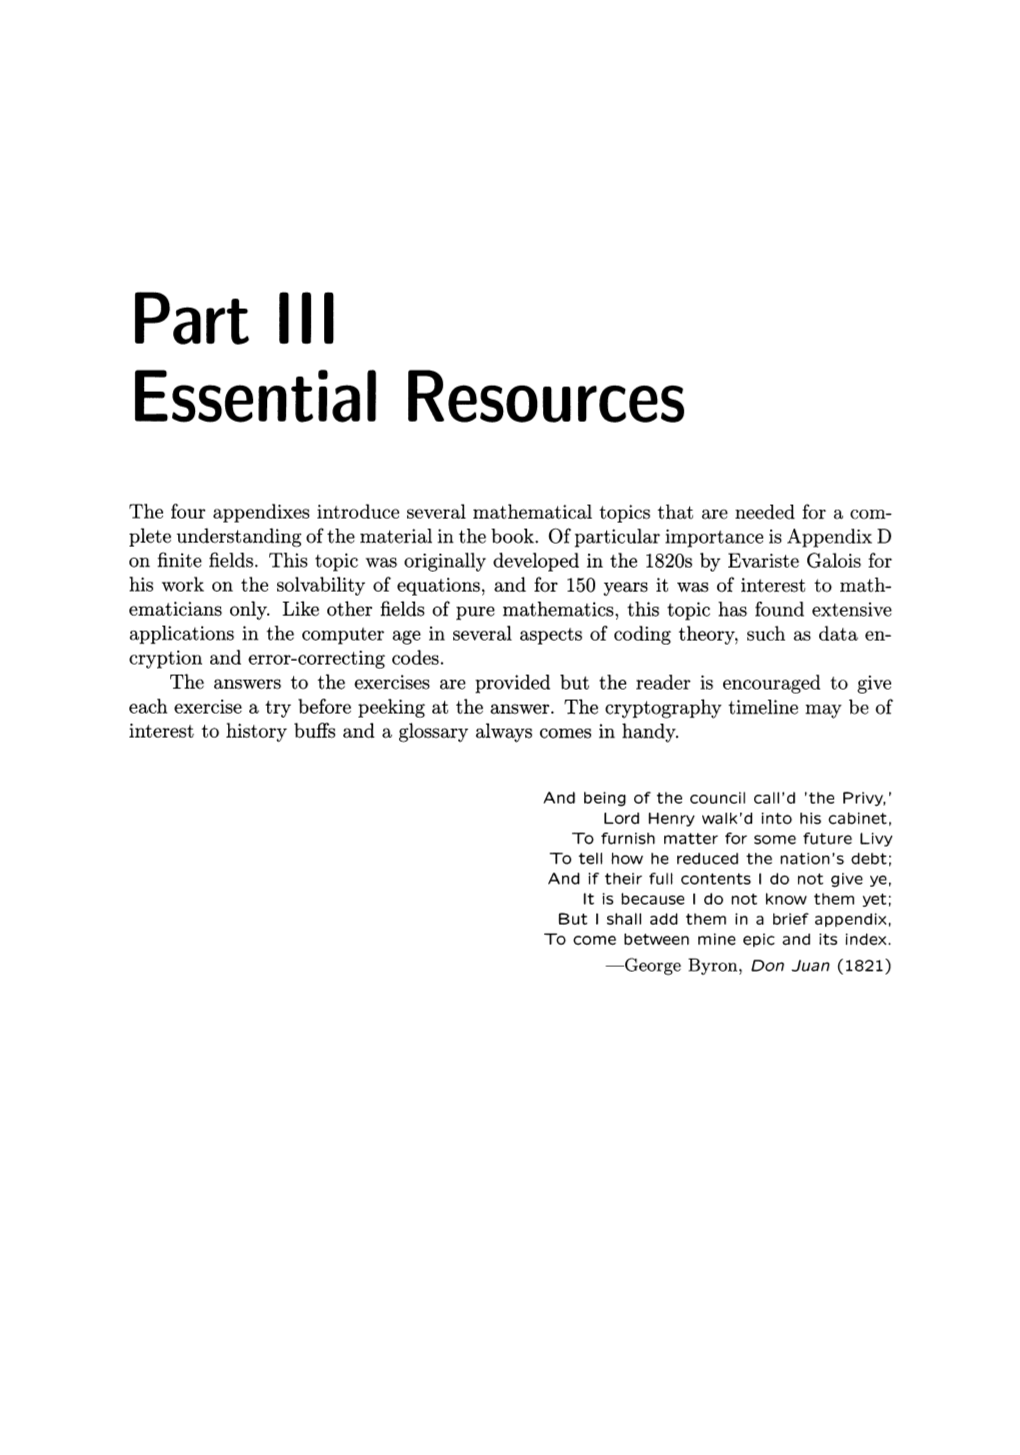 Part III Essential Resources